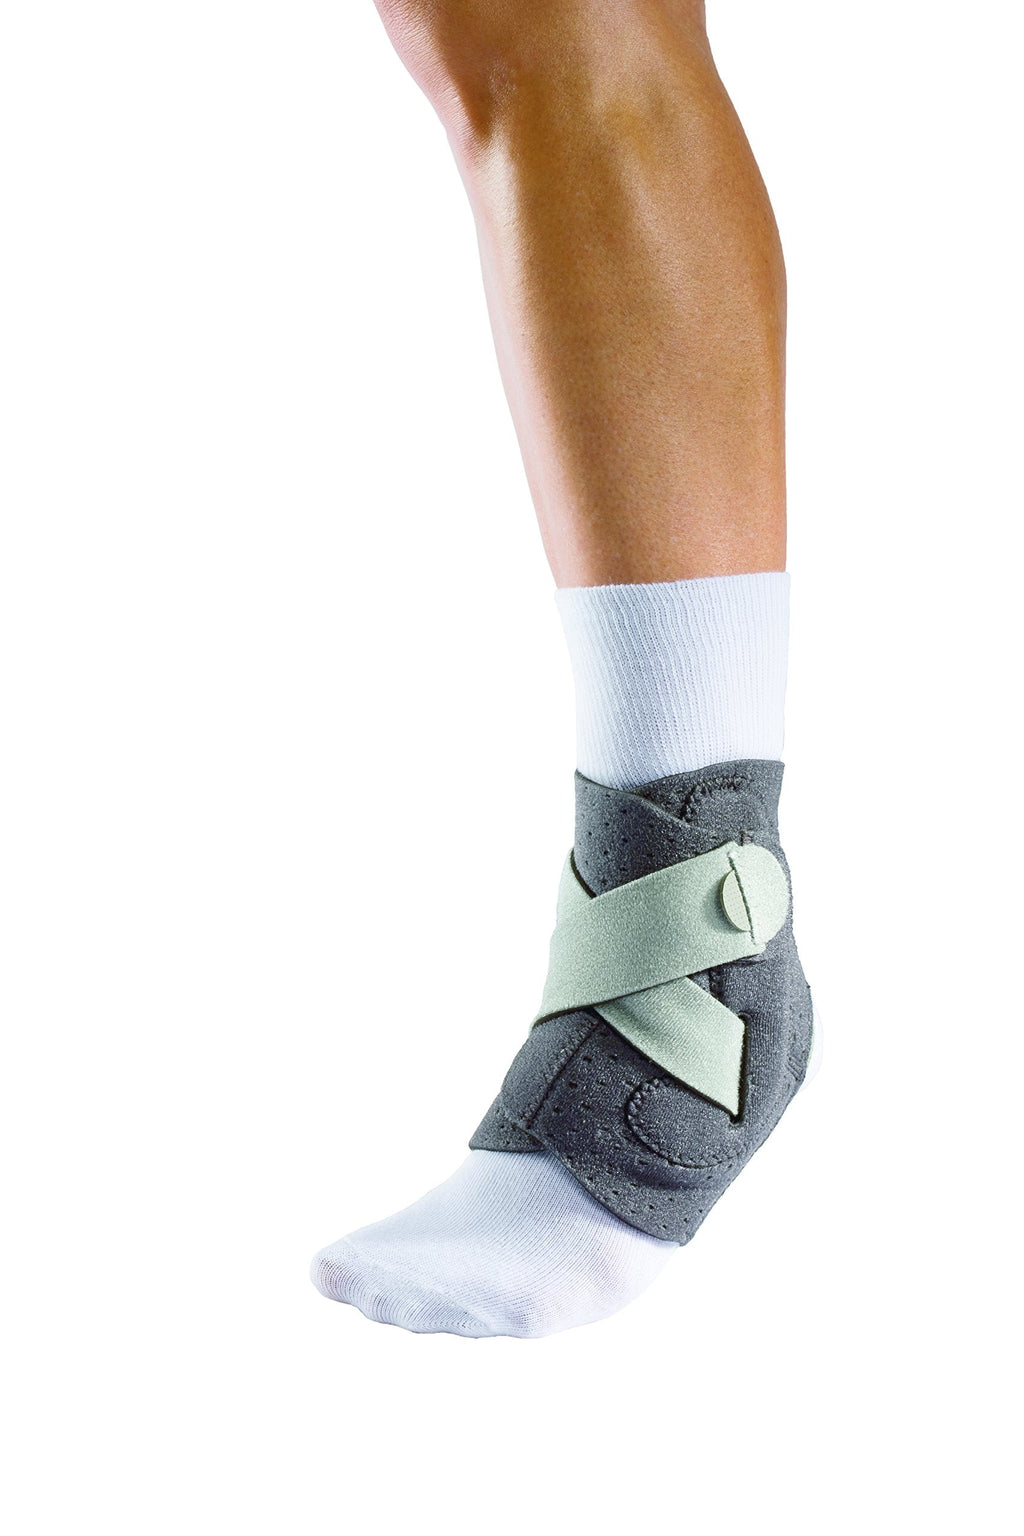 [Australia] - Mueller Sports Medicine Adjust-to-Fit Ankle Support, 0.29 Pound 